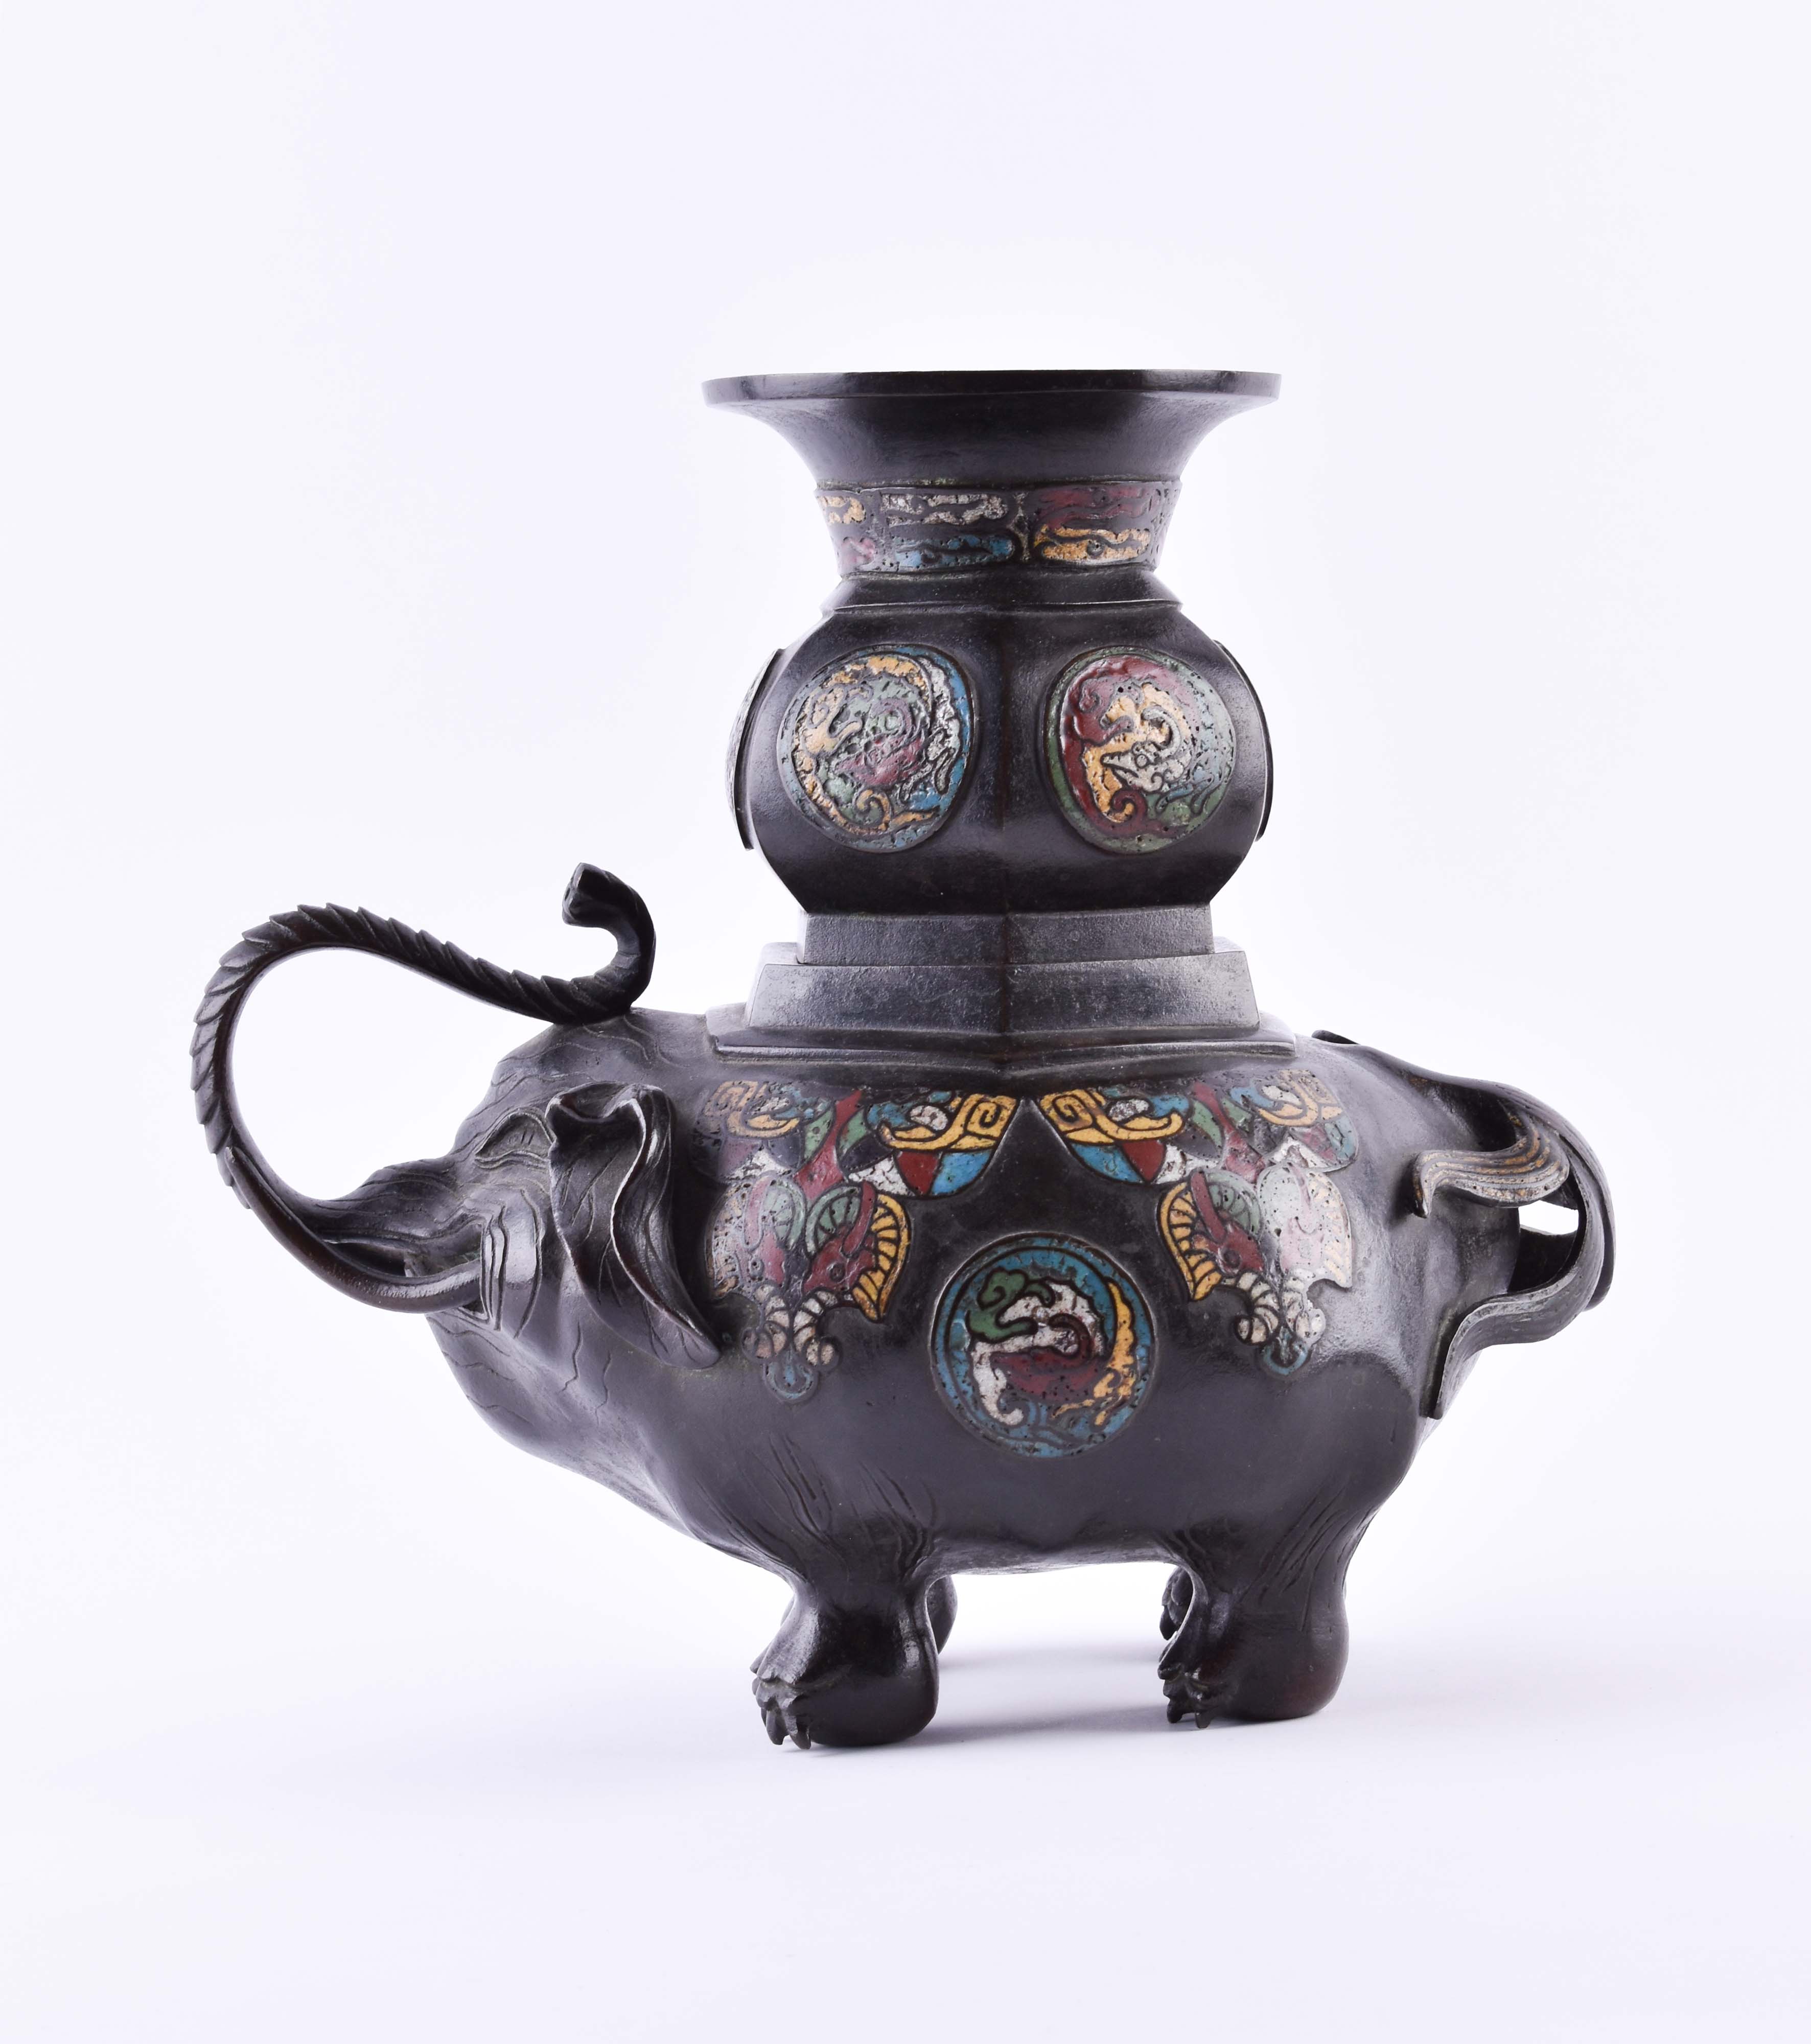  Figurative cloisonne Koro China Qing dynasty - Image 4 of 10